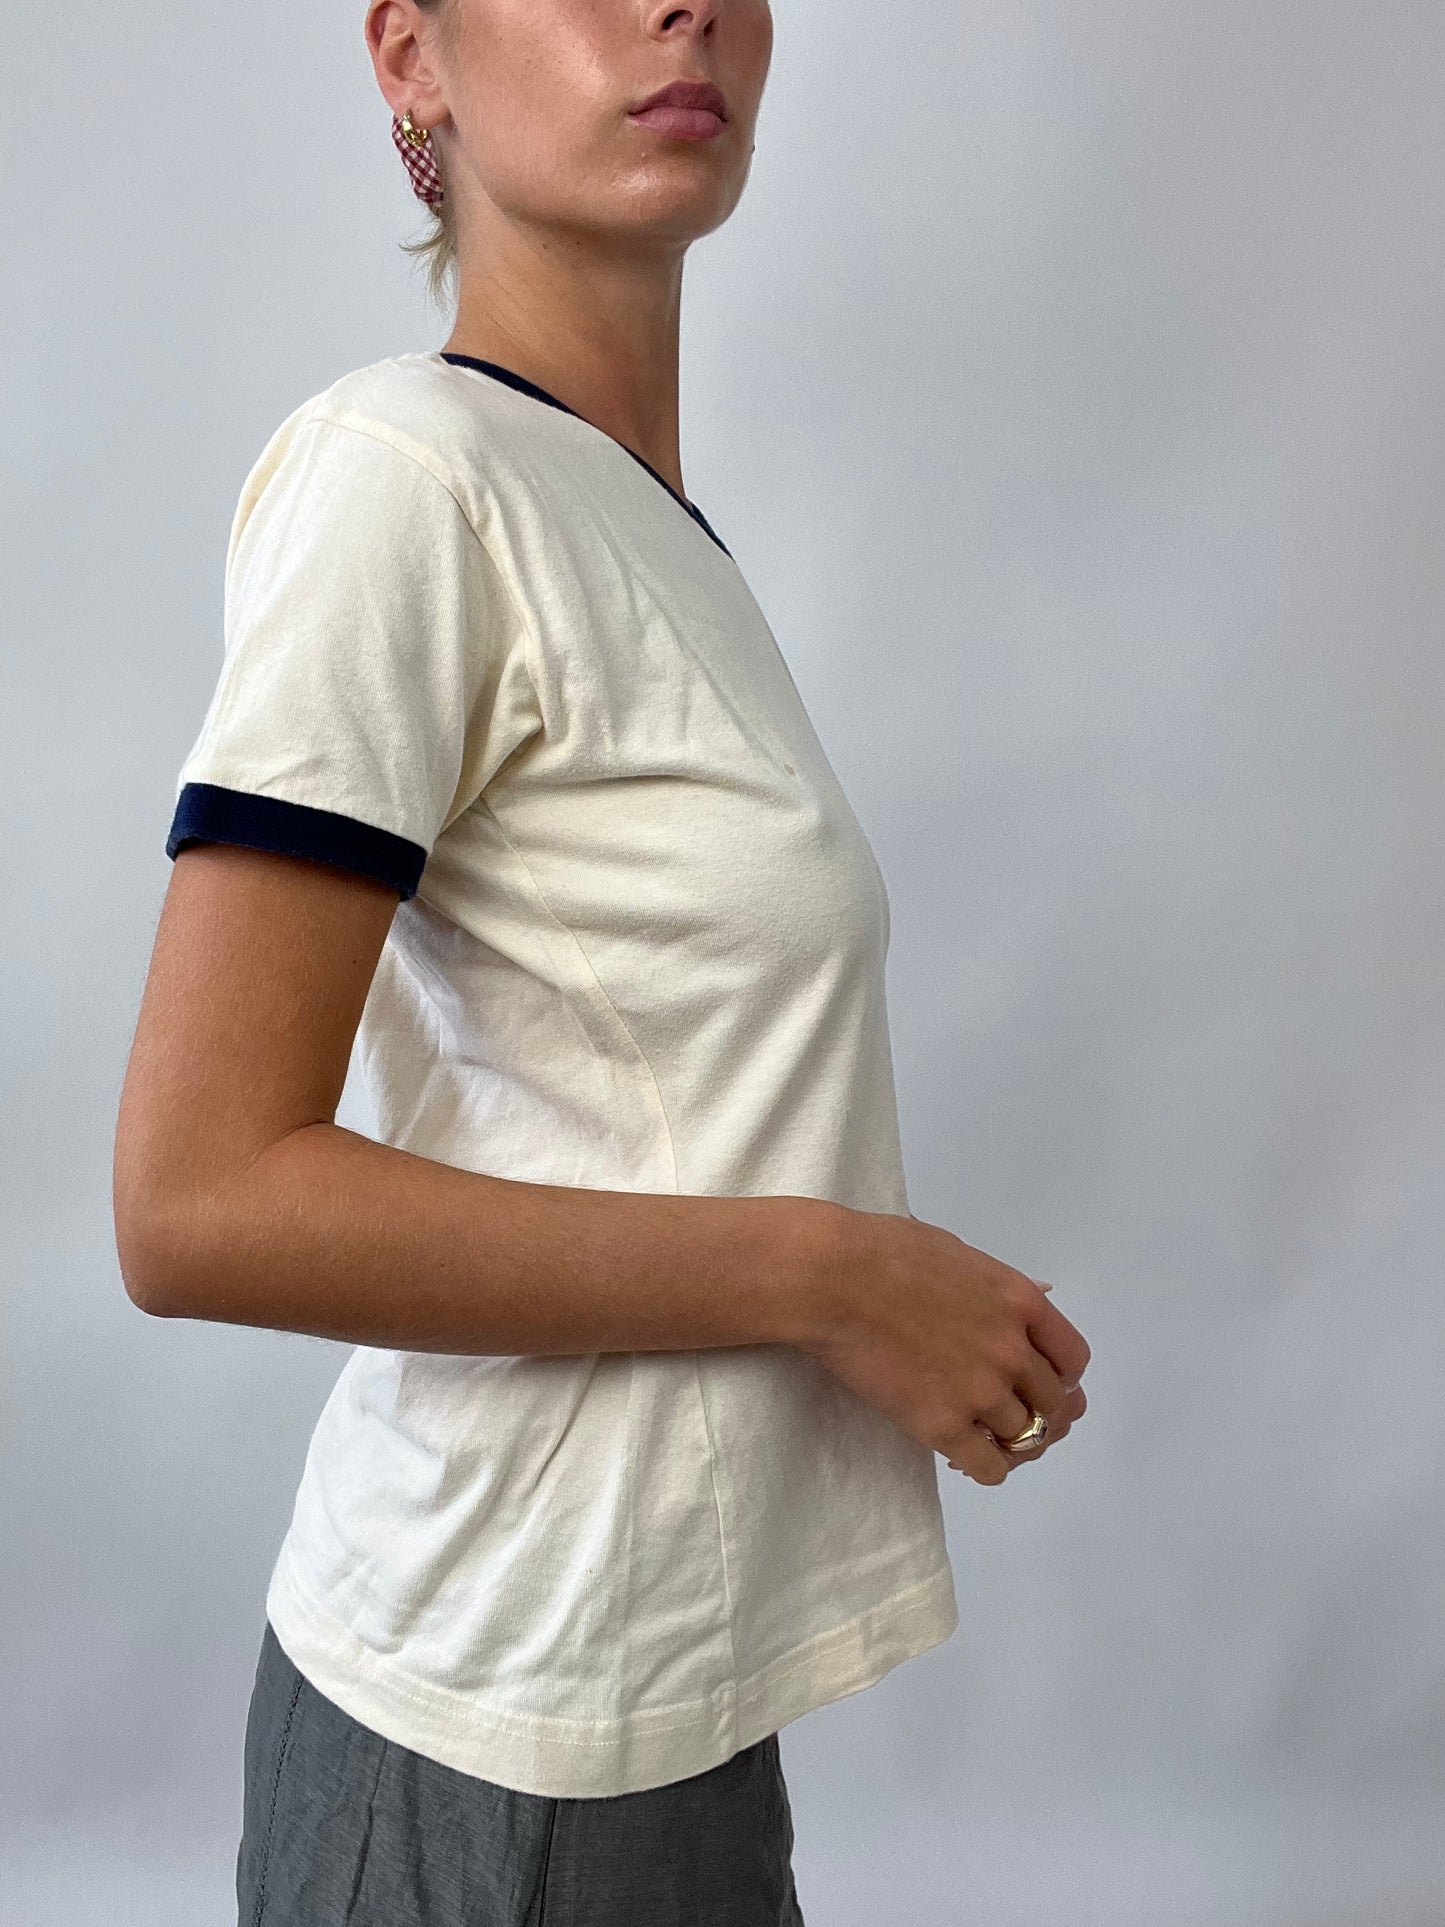 PUB GARDEN DROP | medium white adidas top with navy outline